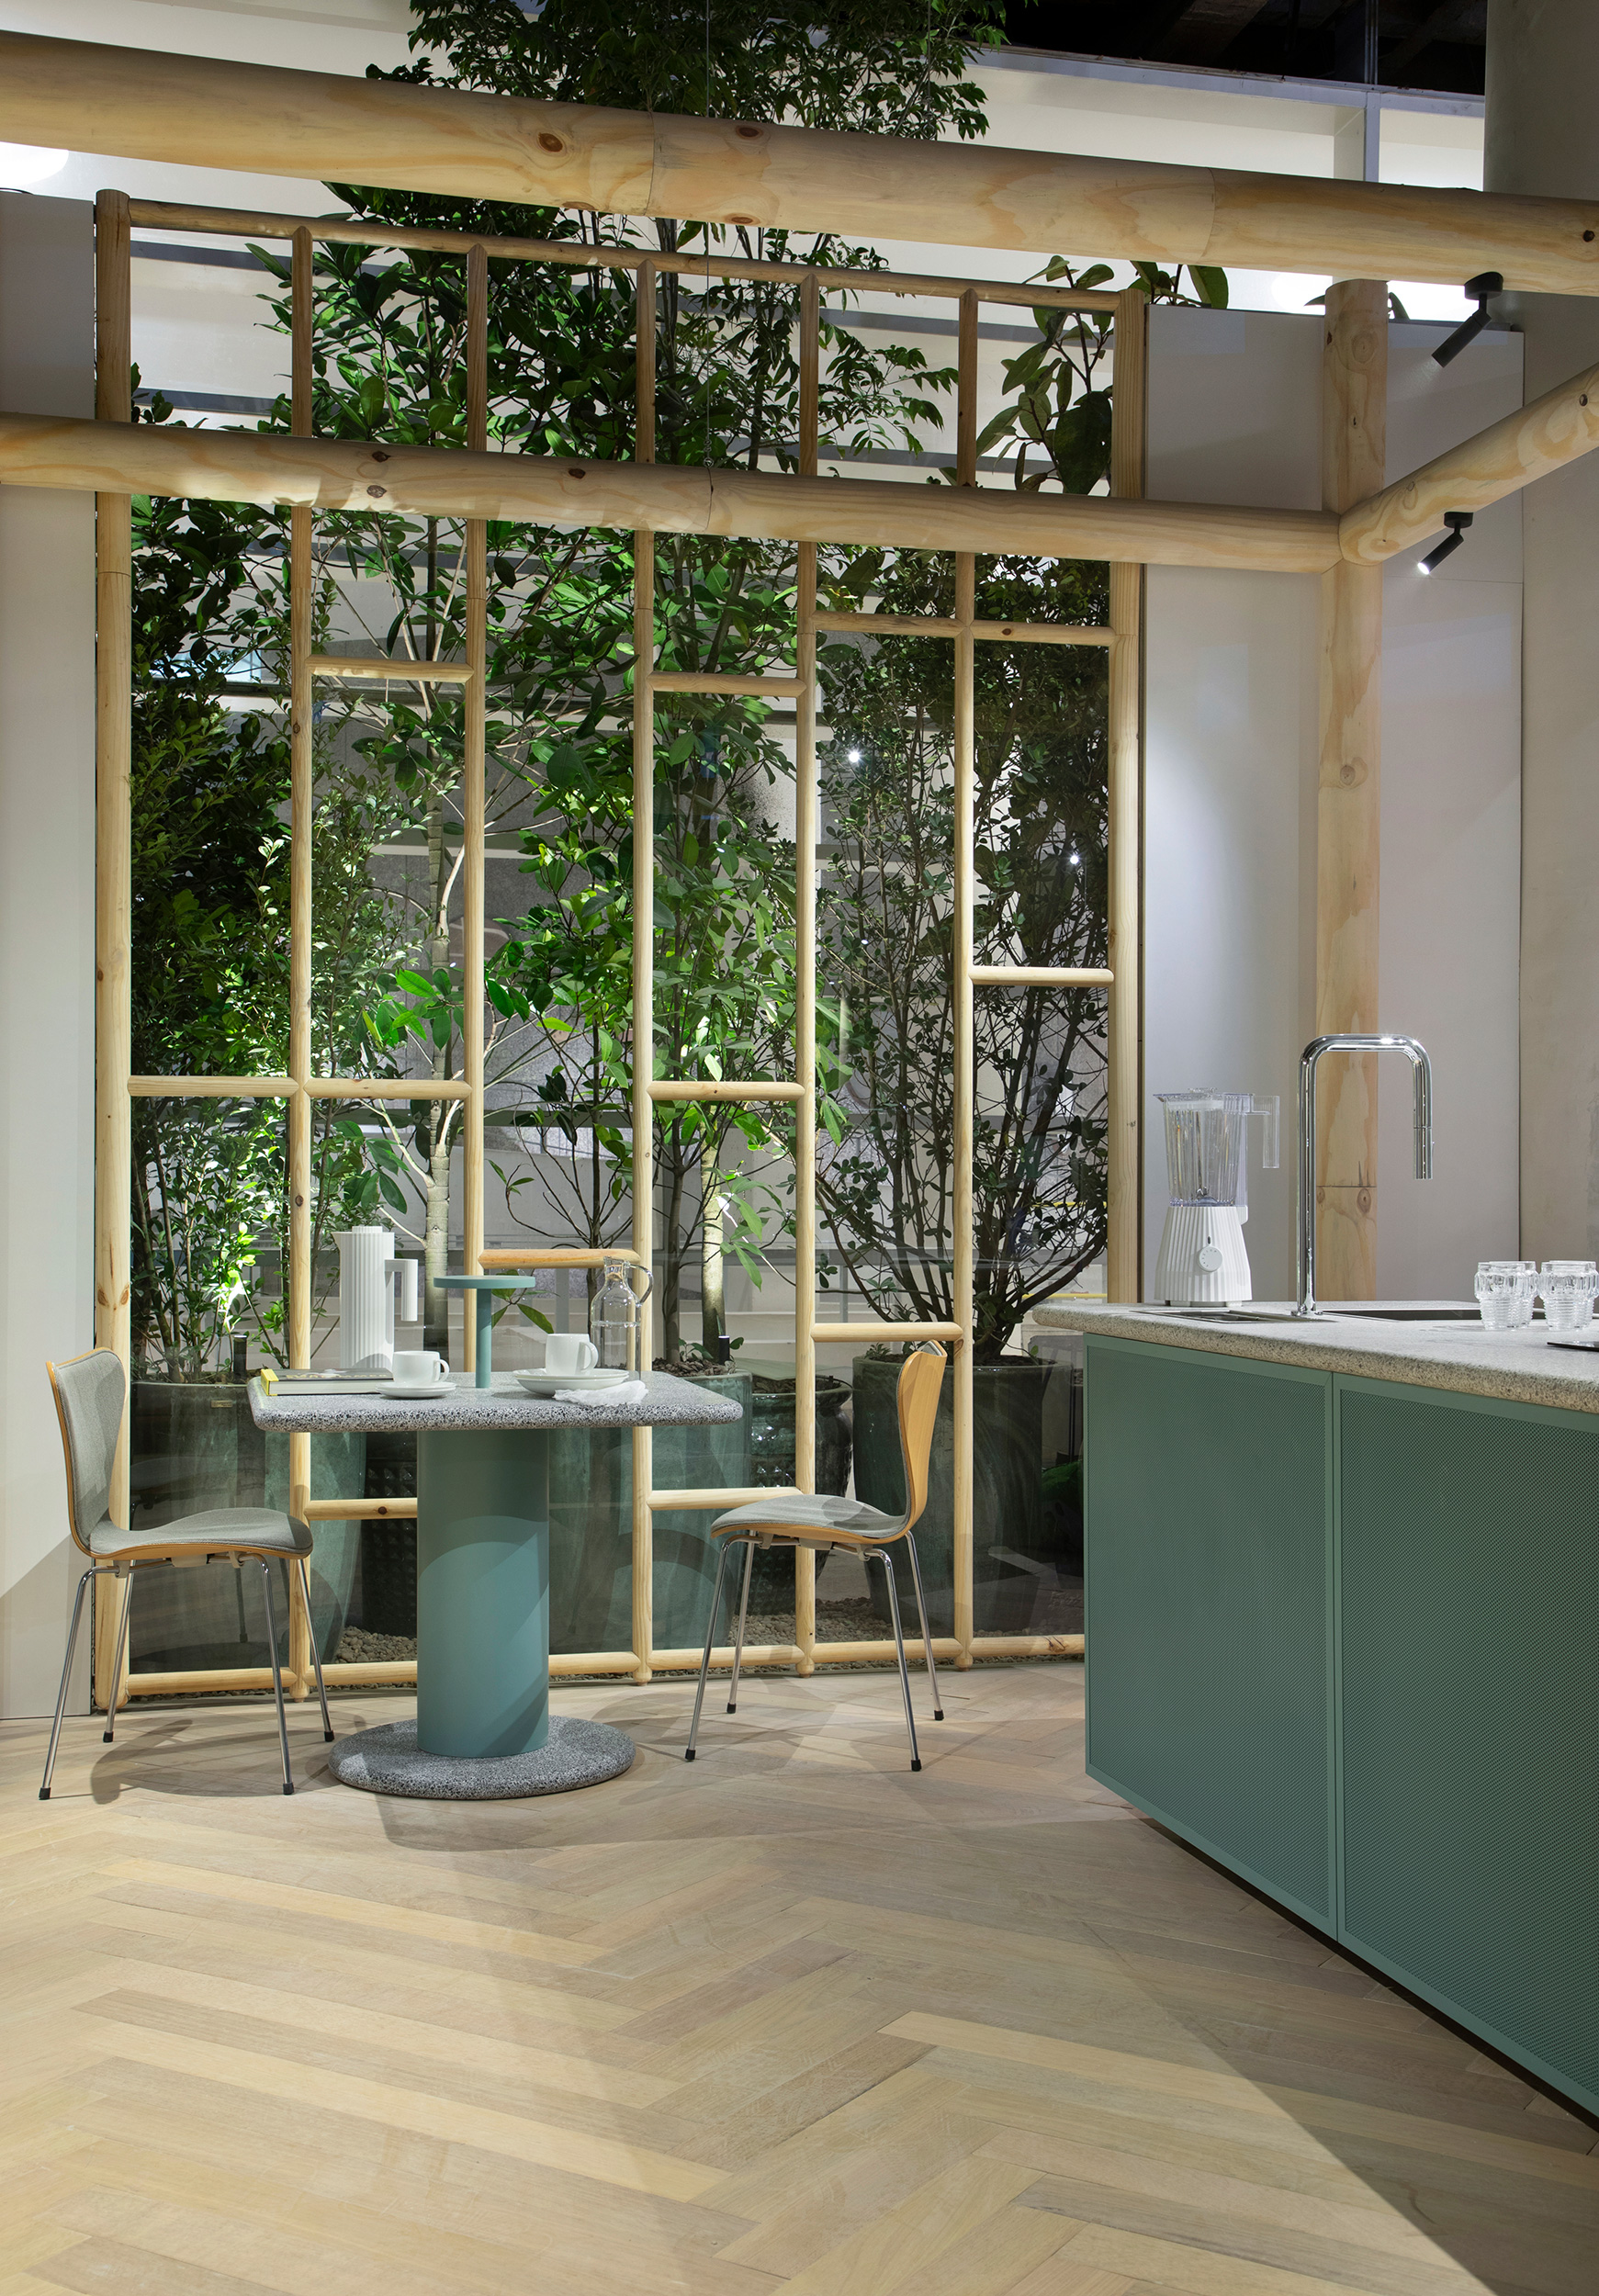 tufi mousse arquitetura studio alfi casacor sao paulo 2022 decor mostra decoracao sala de jantar cadeira mesa bancada verde